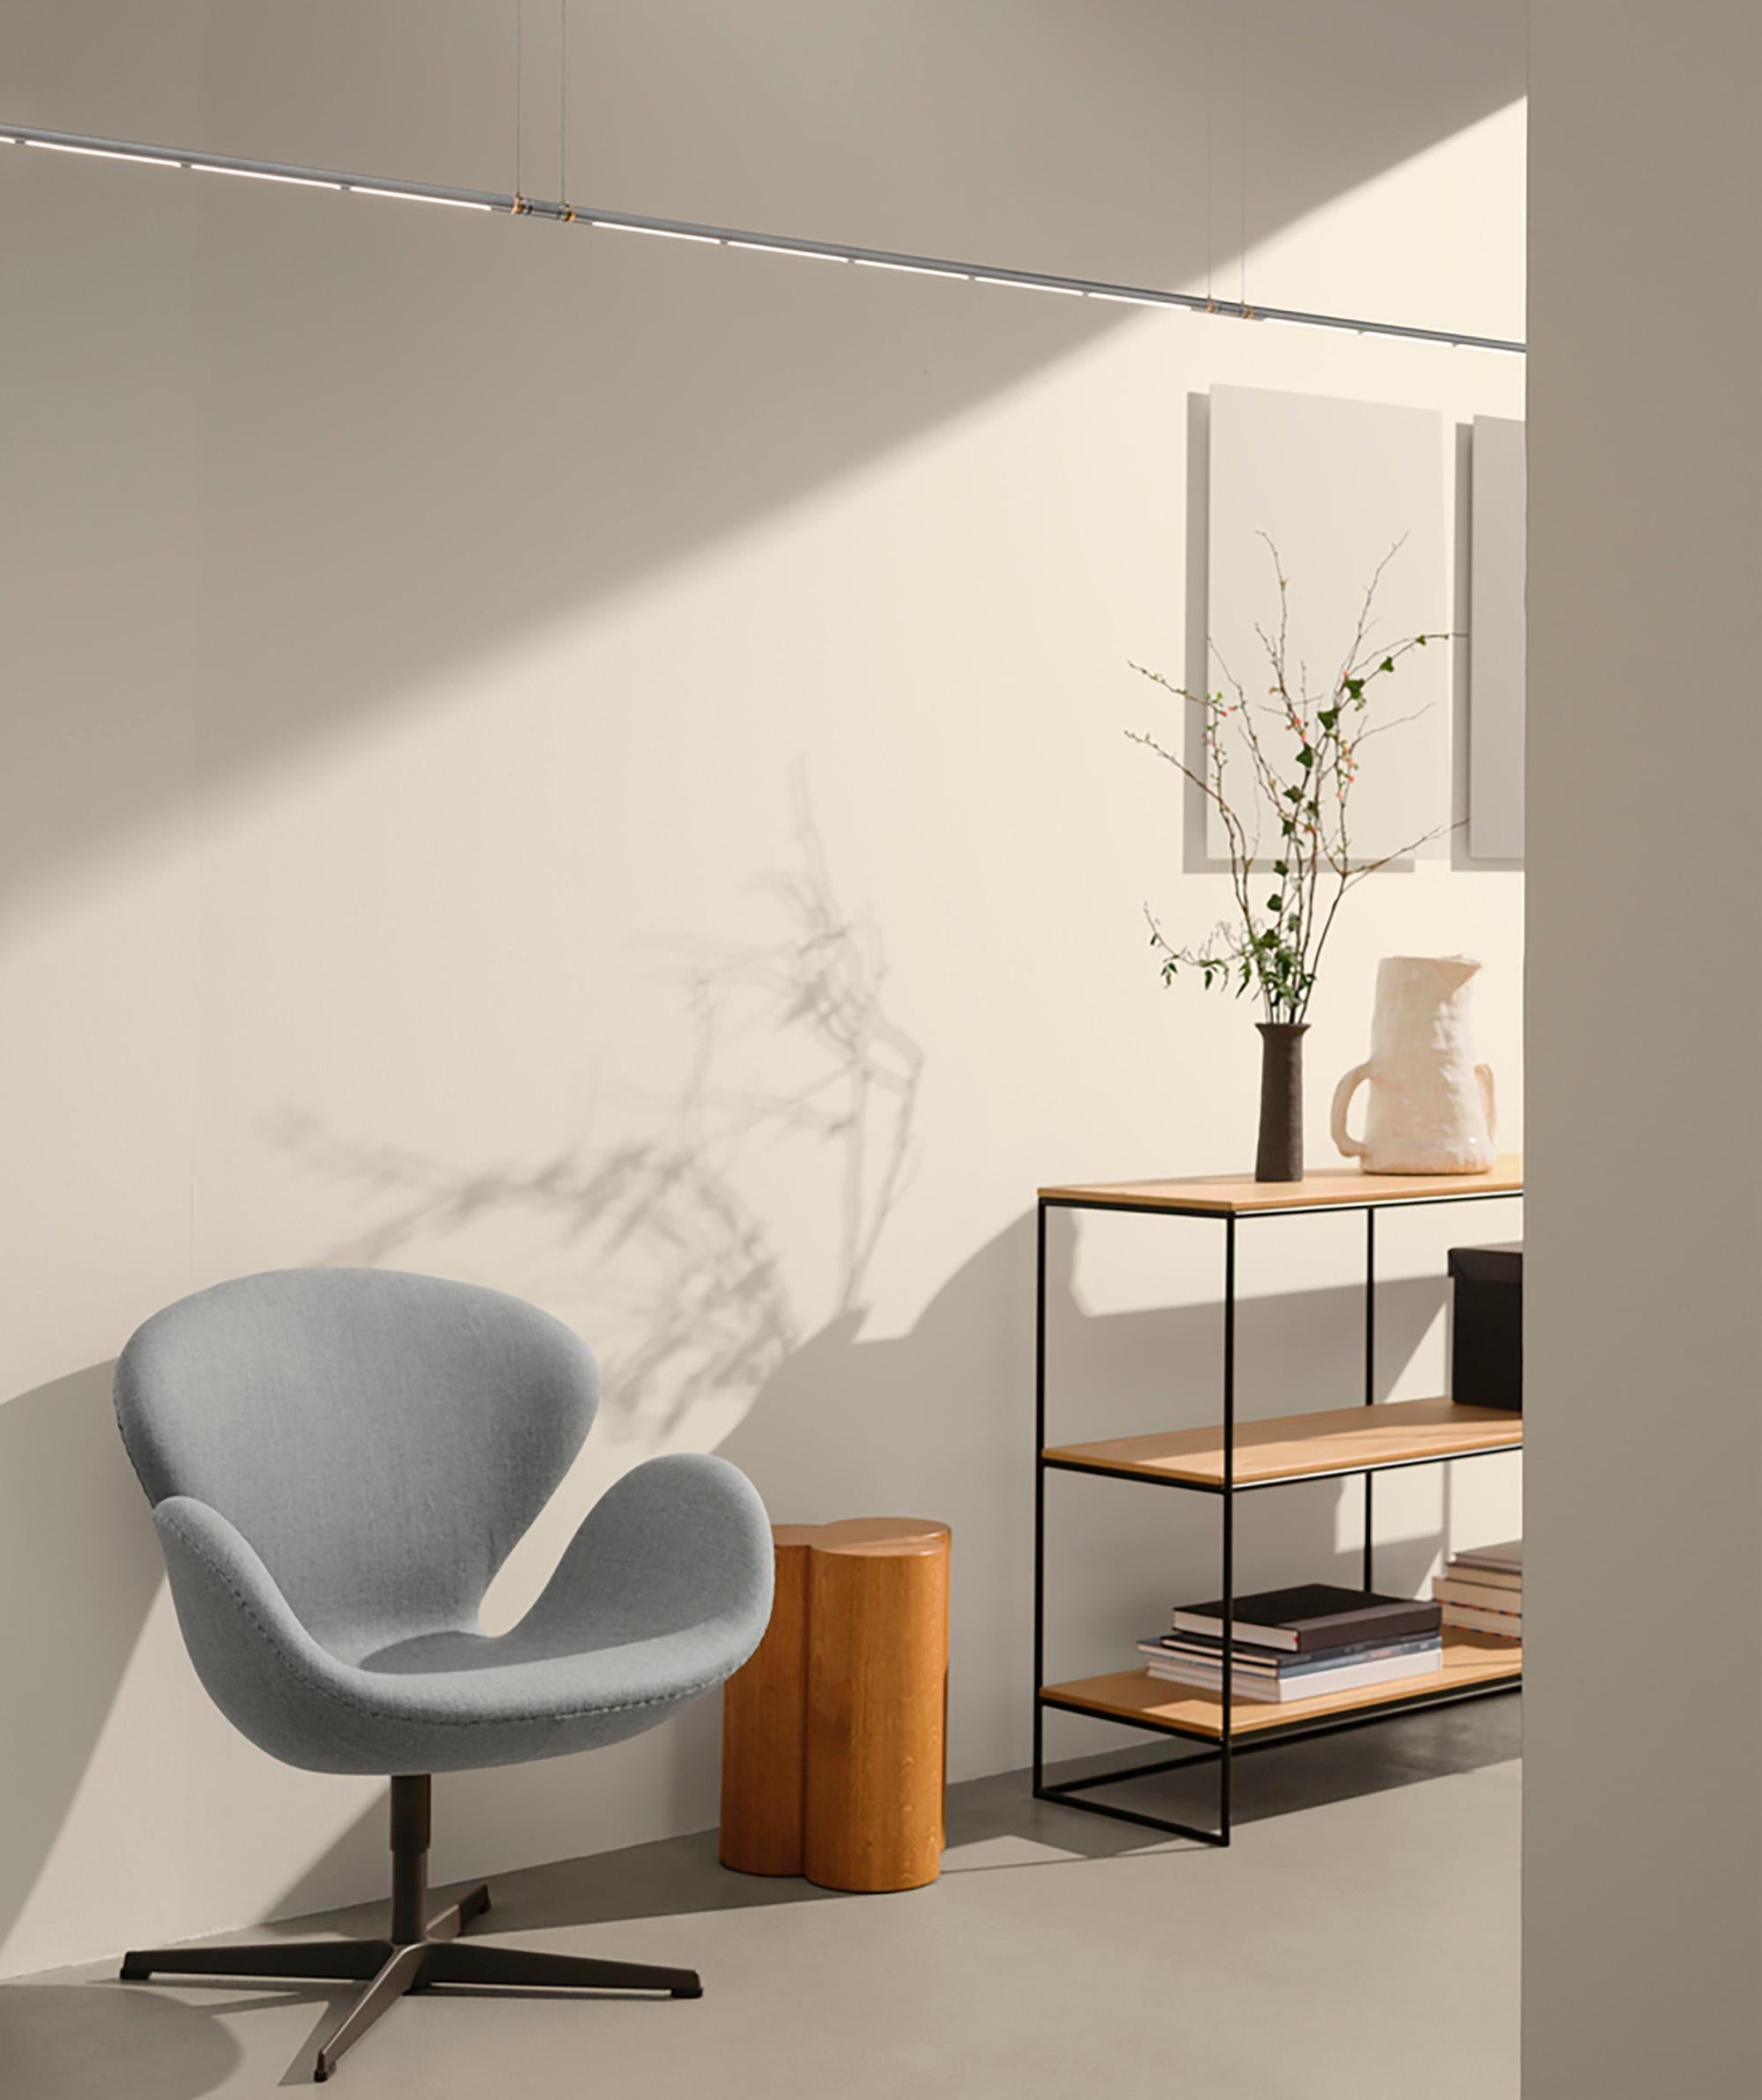 Arne Jacobsen 'Swan' Chair for Fritz Hansen in Leather Upholstery (Cat. 4) For Sale 1